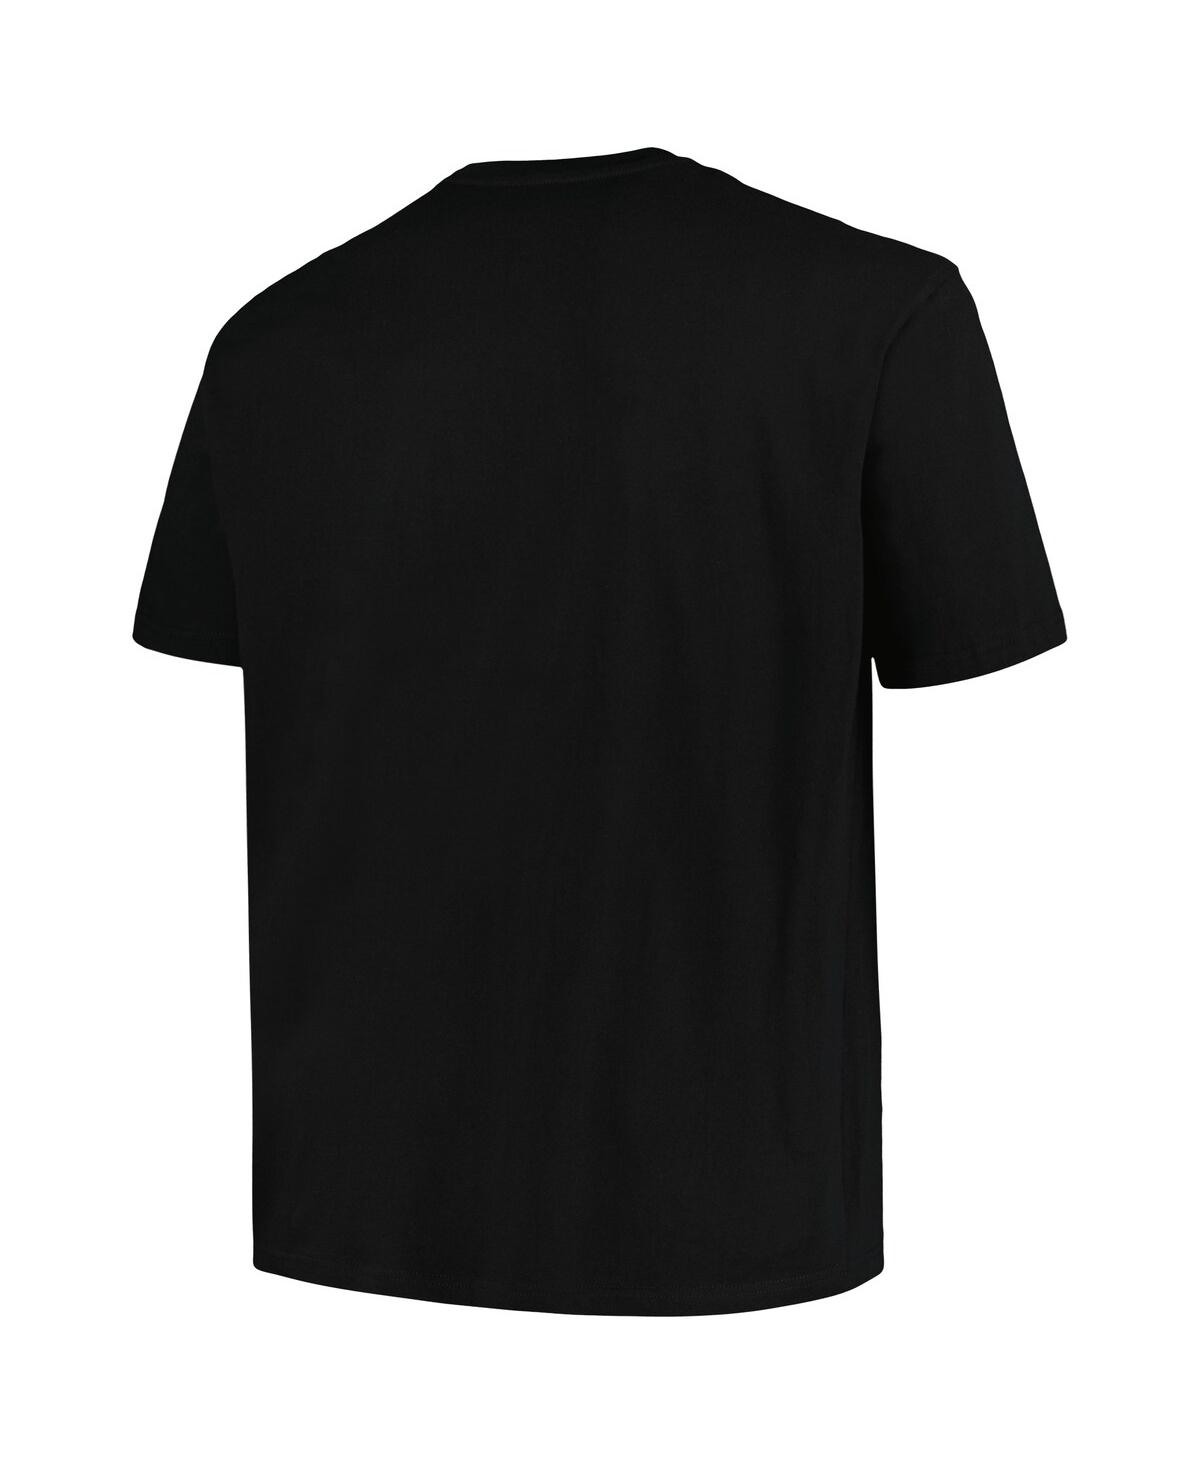 Shop Profile Men's Black Philadelphia Flyers Big Tall Arch Over Logo T-shirt